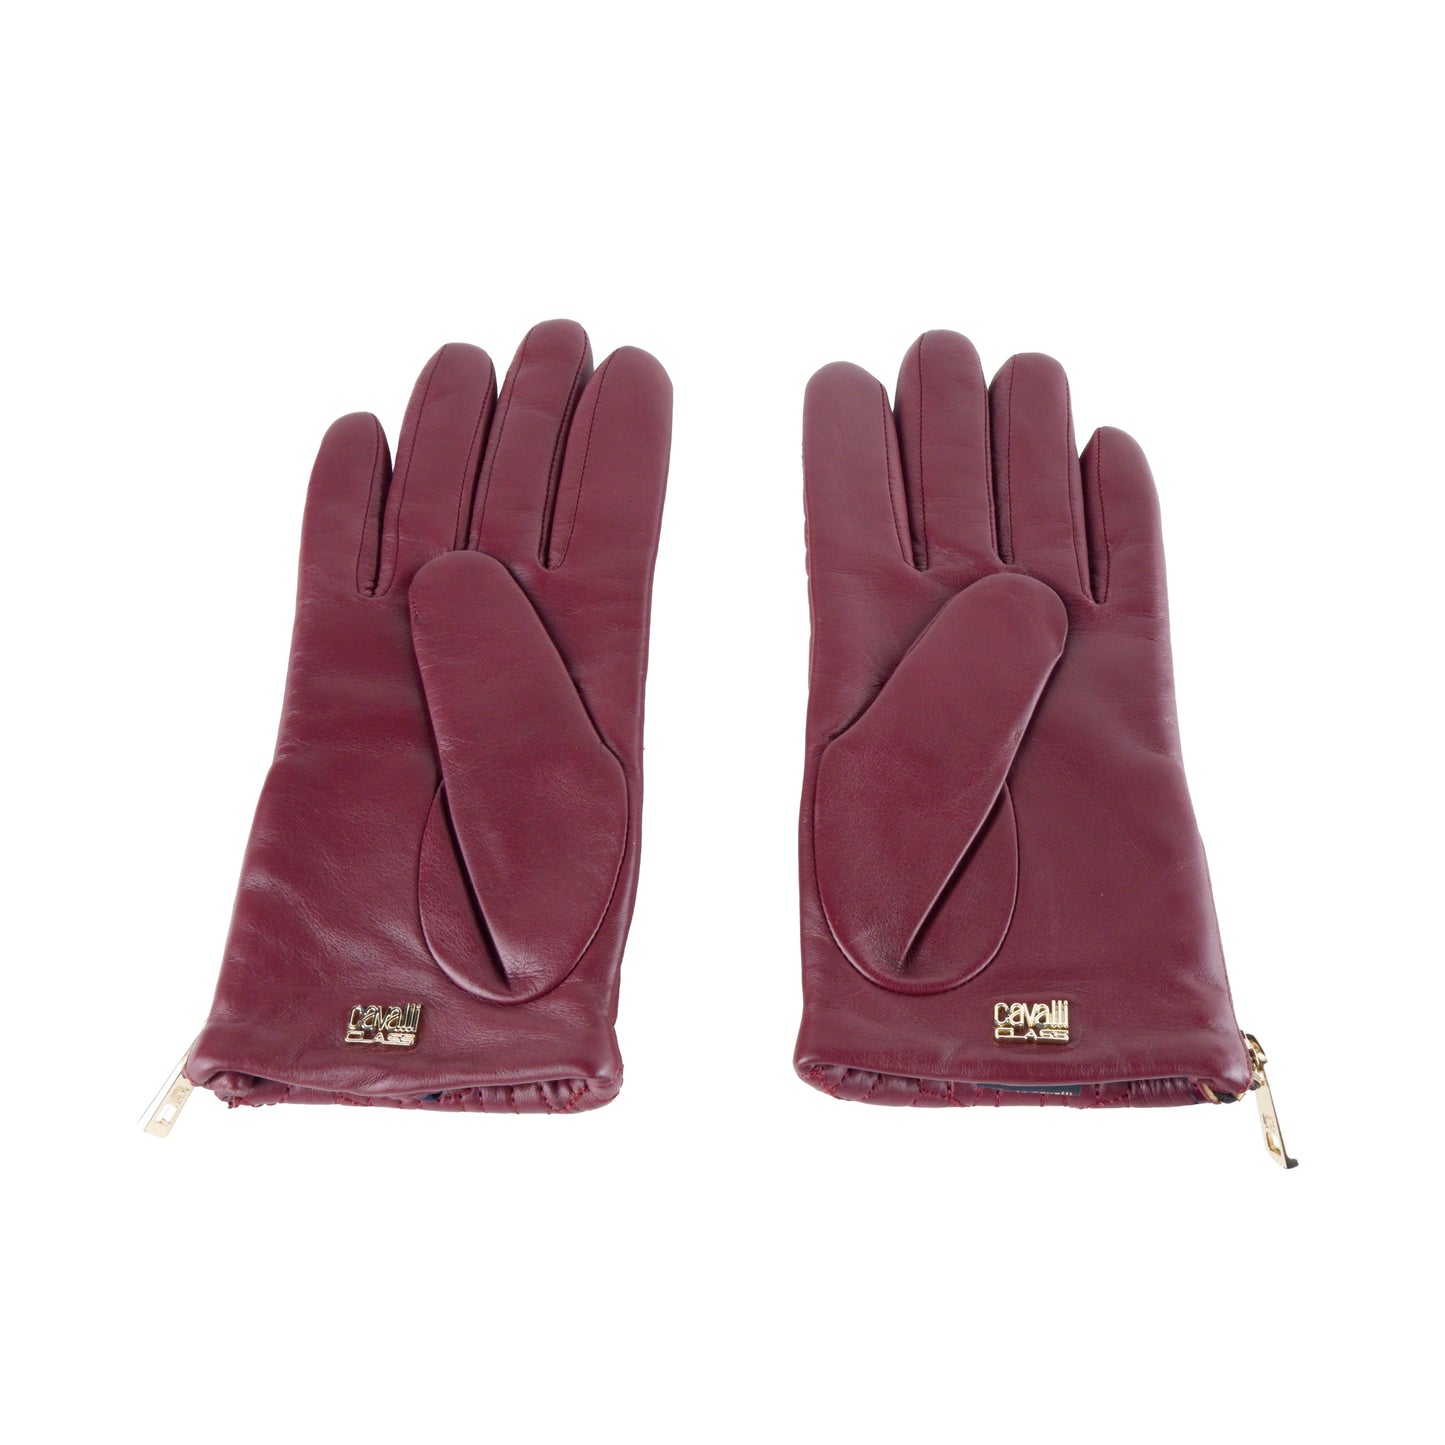 Red Lambskin Glove